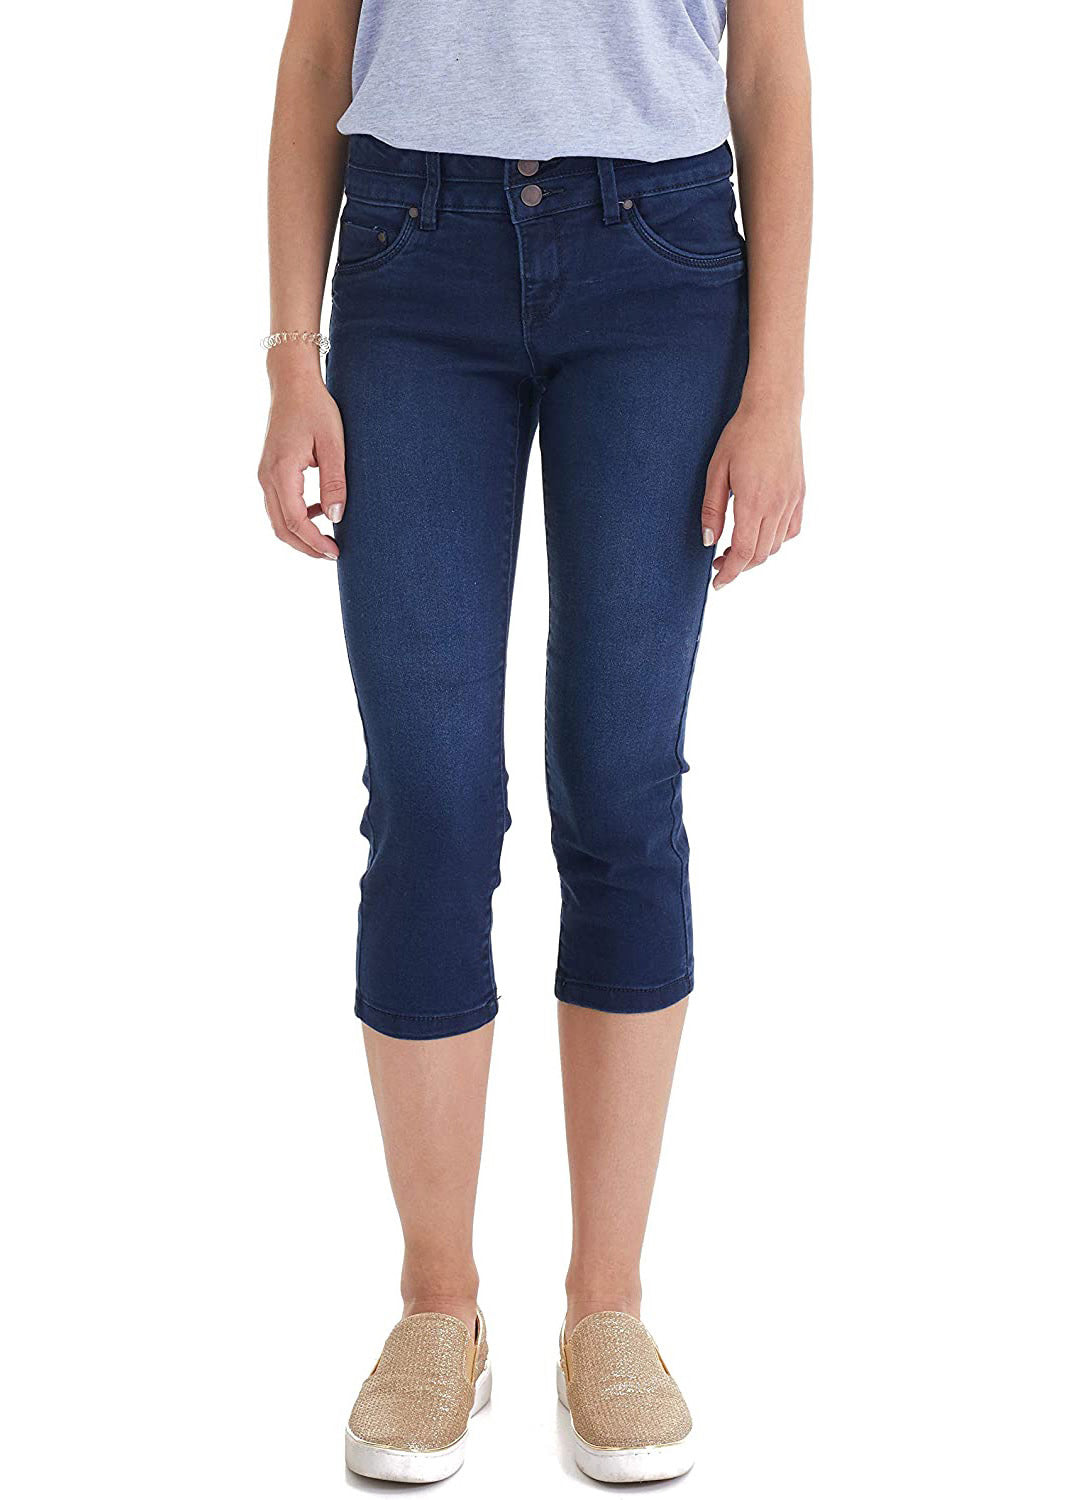 njshnmn Women Skinny Ripped Jeans Slim Fit Denim Pants - Walmart.com